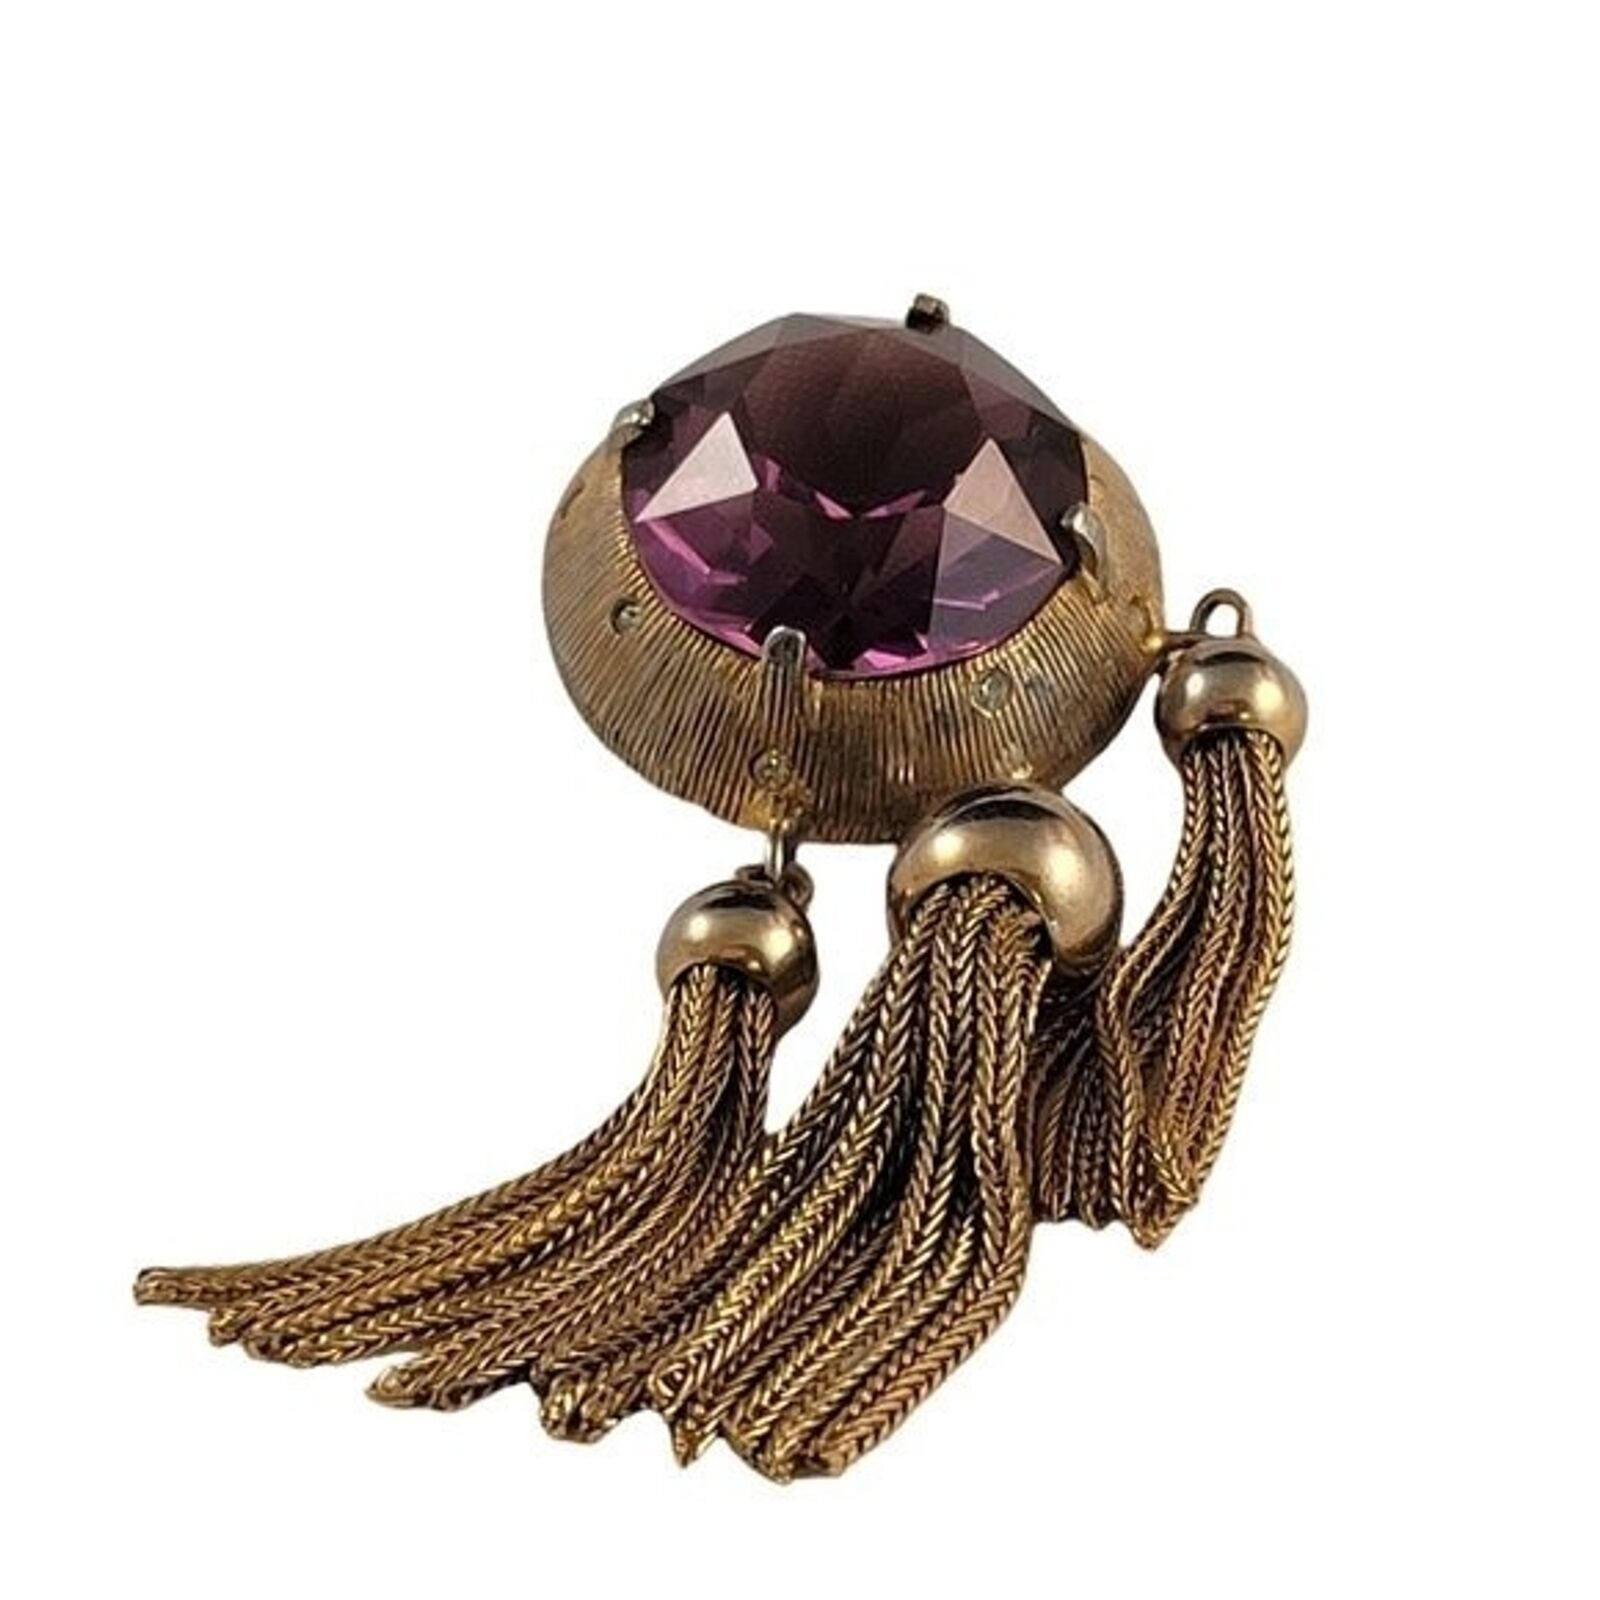 Vintage Antique Goldtone Purple Glass Brooch with Tassles